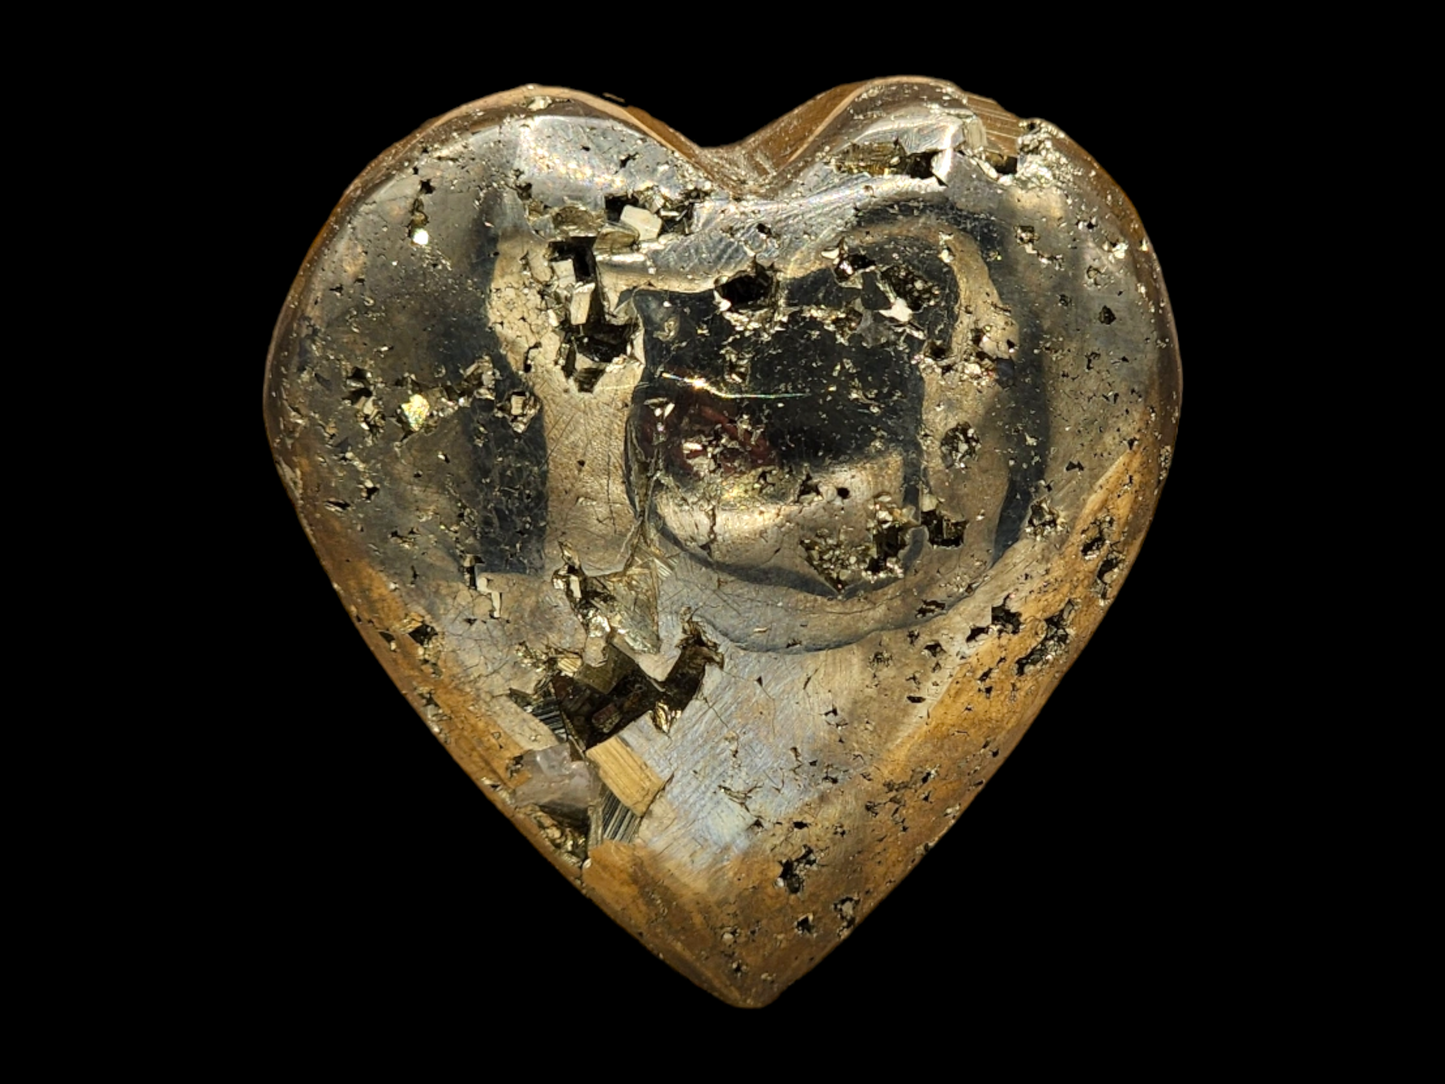 Peru Iron Pyrite Heart - Reiki Charged for Abundance and Manifestation